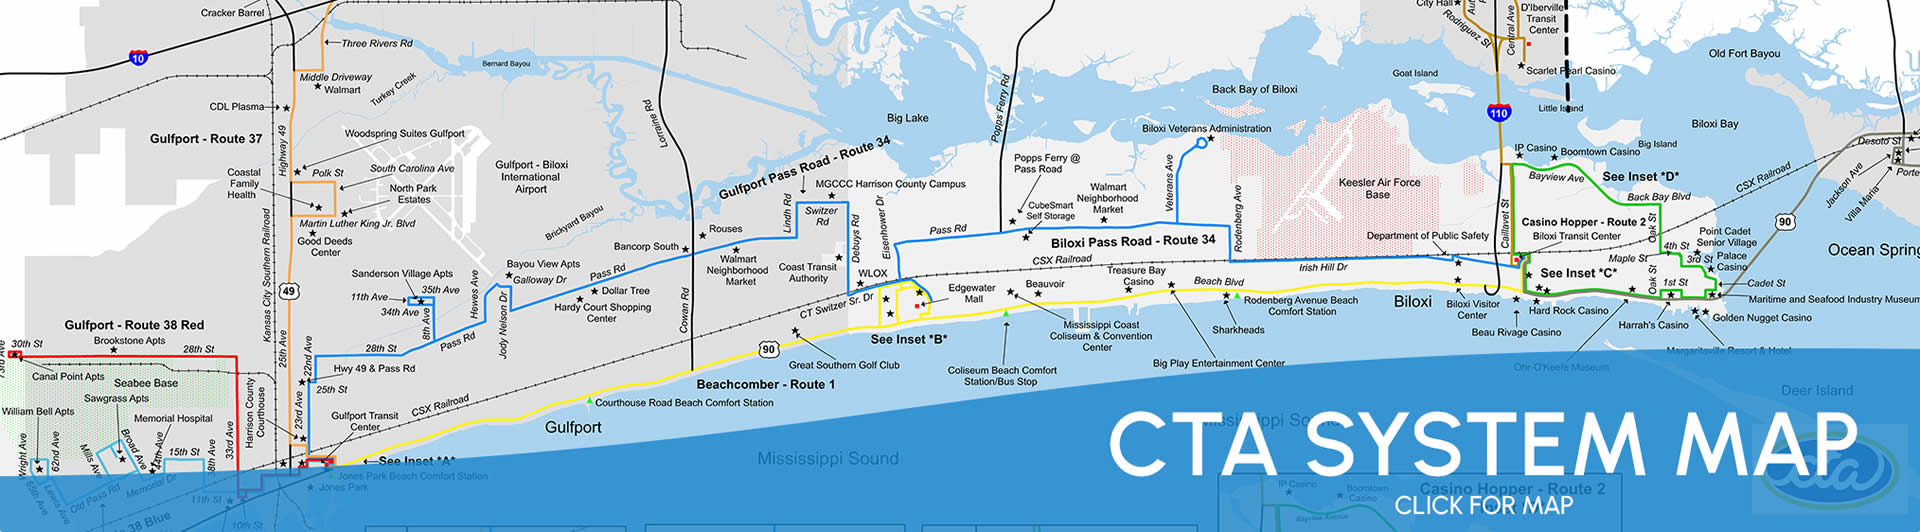 CTA System Map